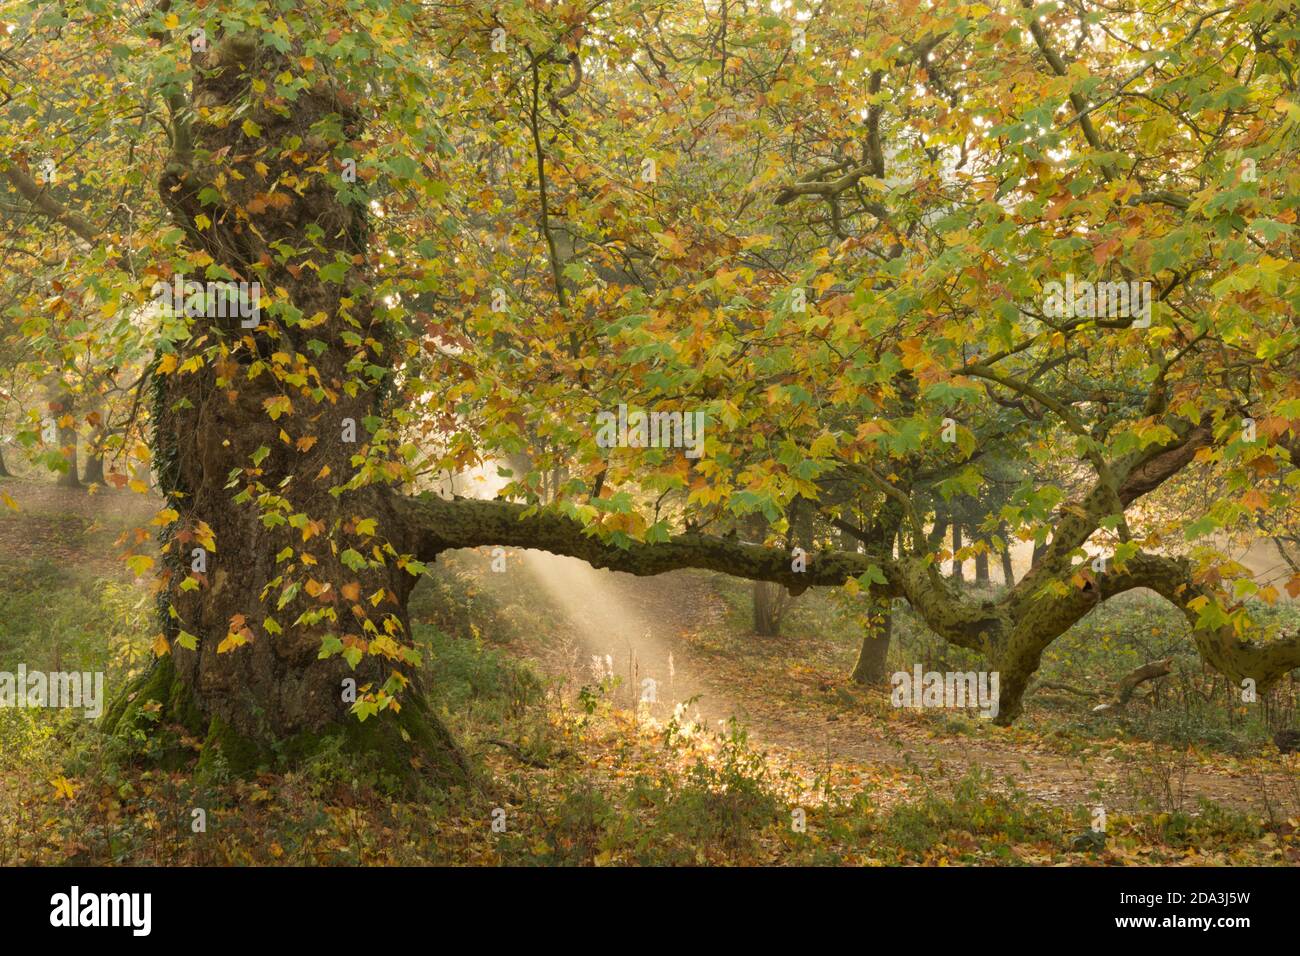 sun rays through mist with a London Plane tree in Cowdray Park, Midhurst, Sussex, UK London Plane, Platanus × acerifolia, November Stock Photo